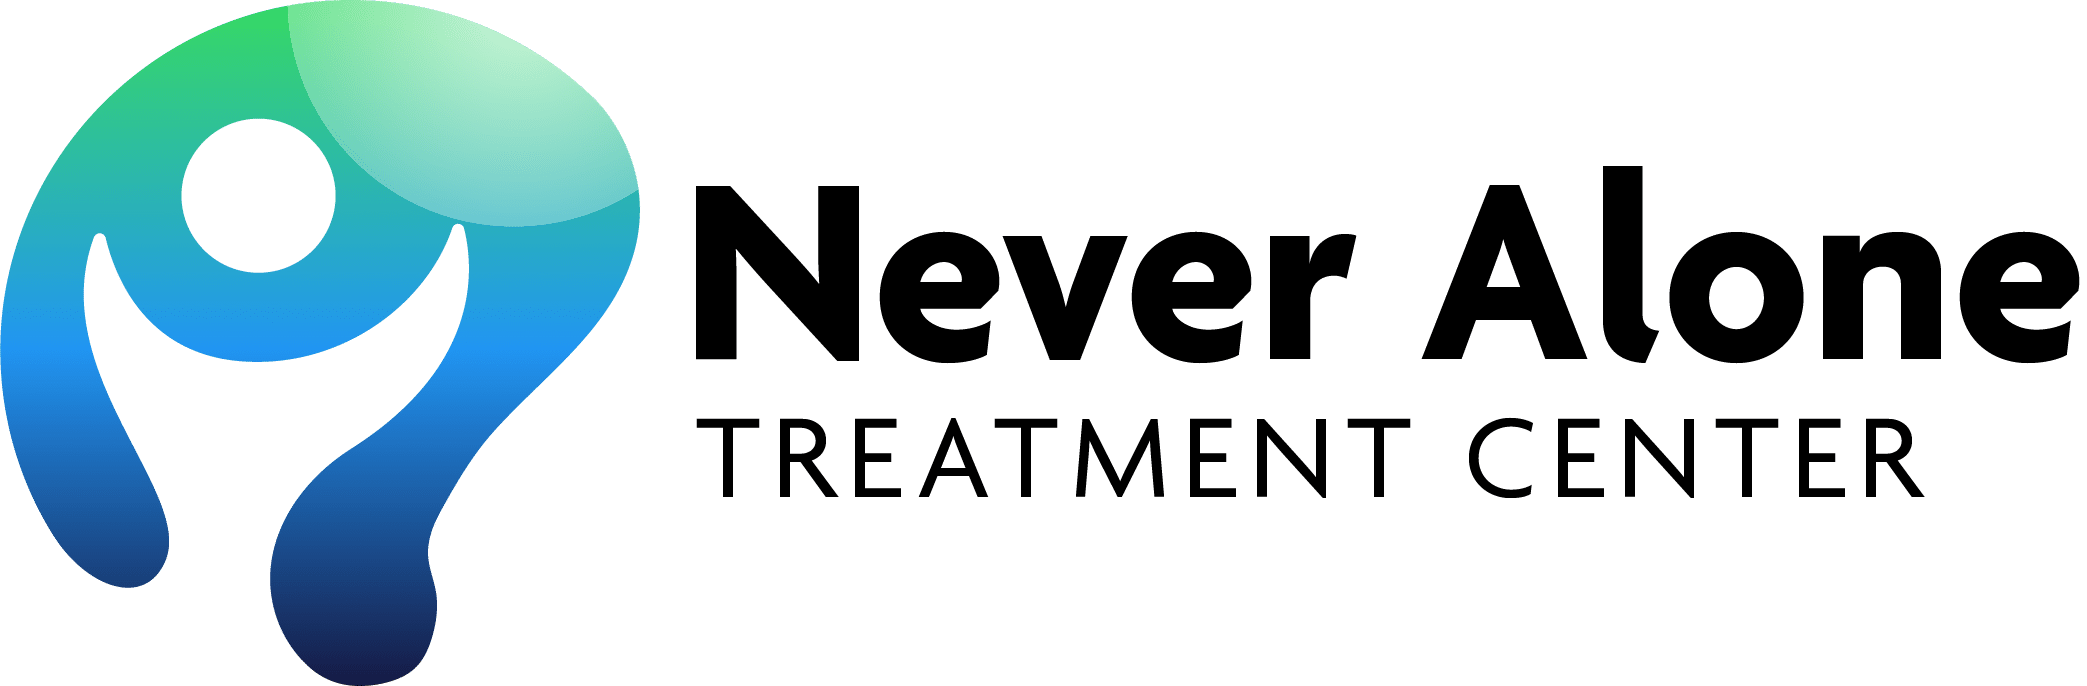 Never Alone Treatment Center